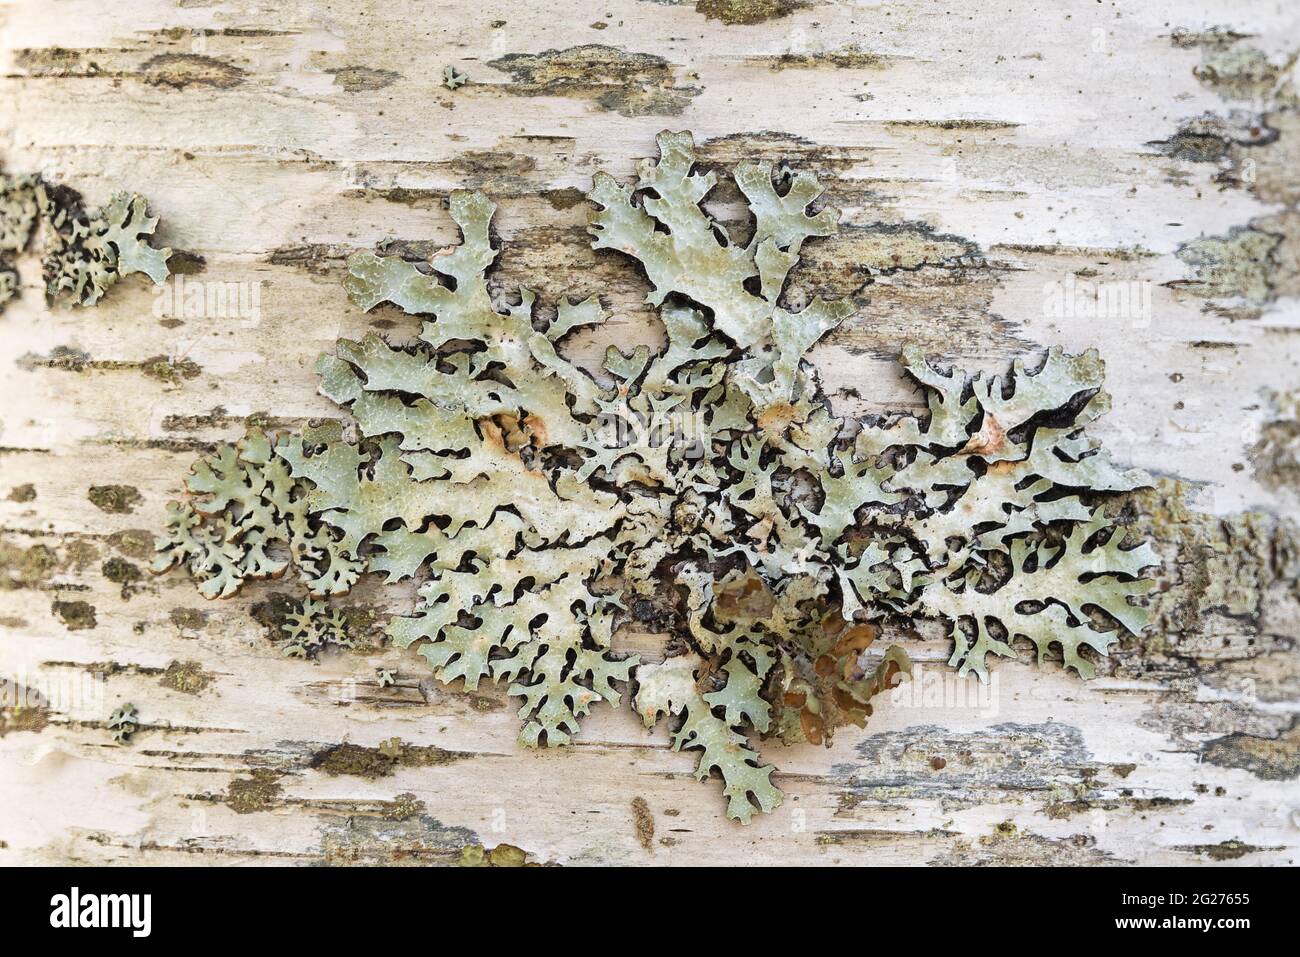 Lichen growing on the bark of a birch tree near Halifax, Nova Scotia, Canada. Stock Photo